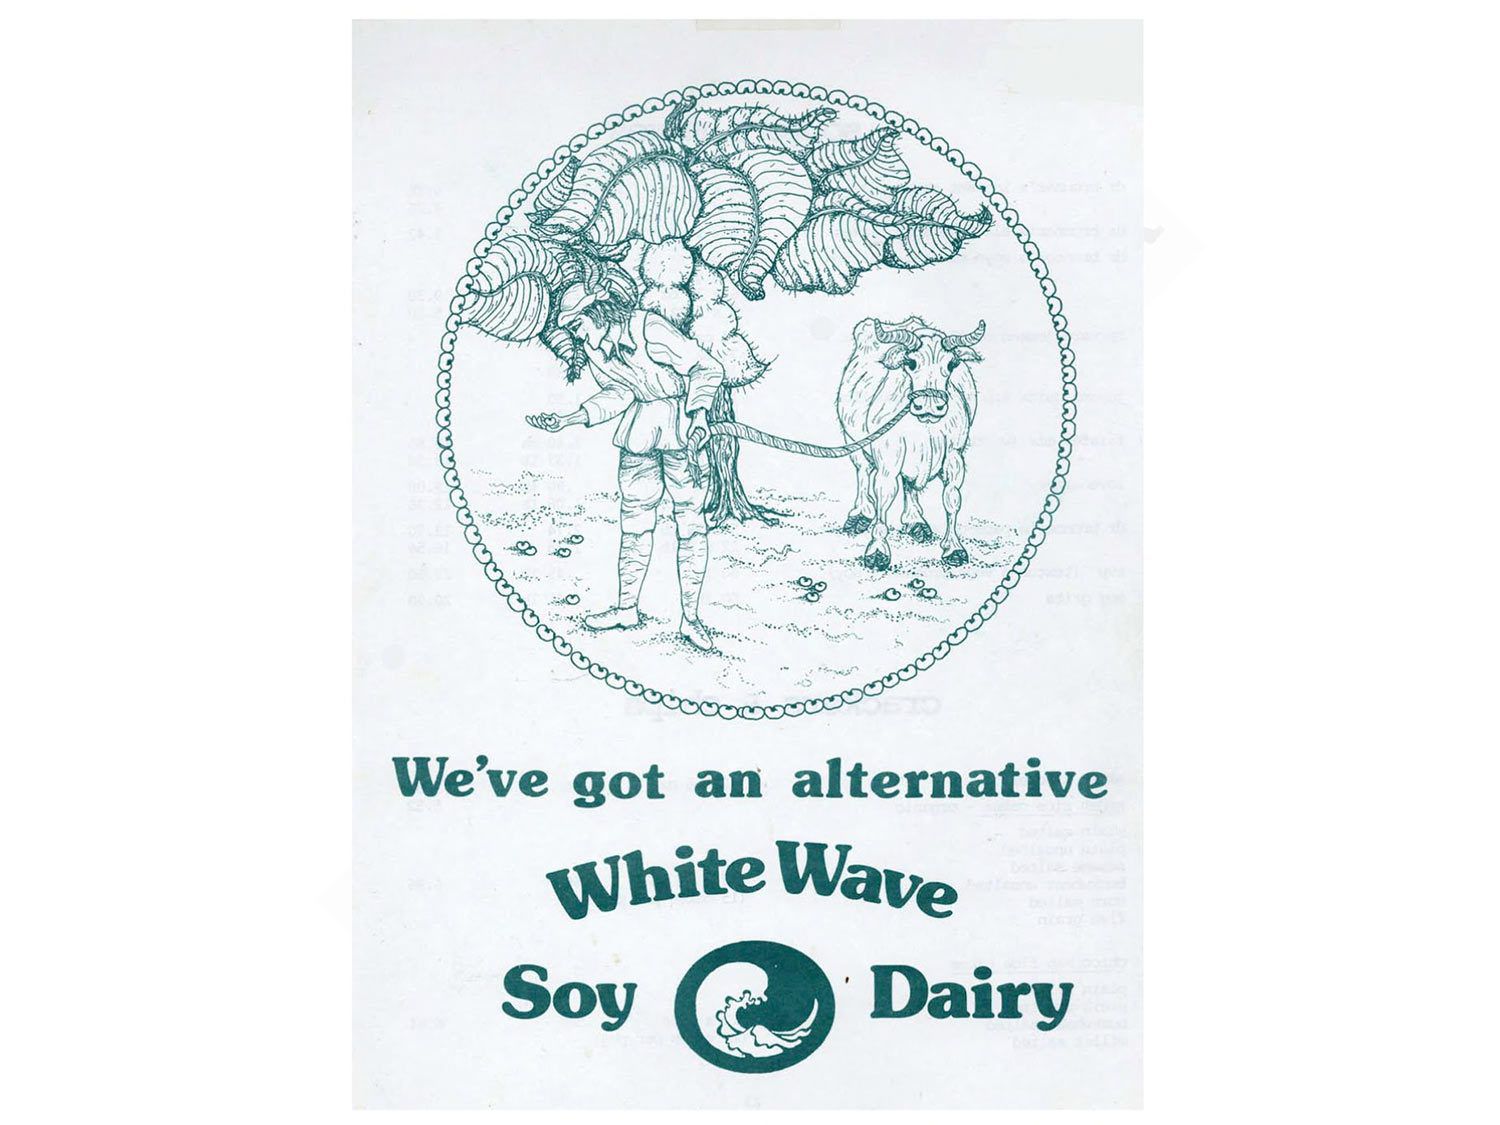 White Wave豆浆的复古广告，有一幅老式的插图，上面画着一头奶牛，宣称，